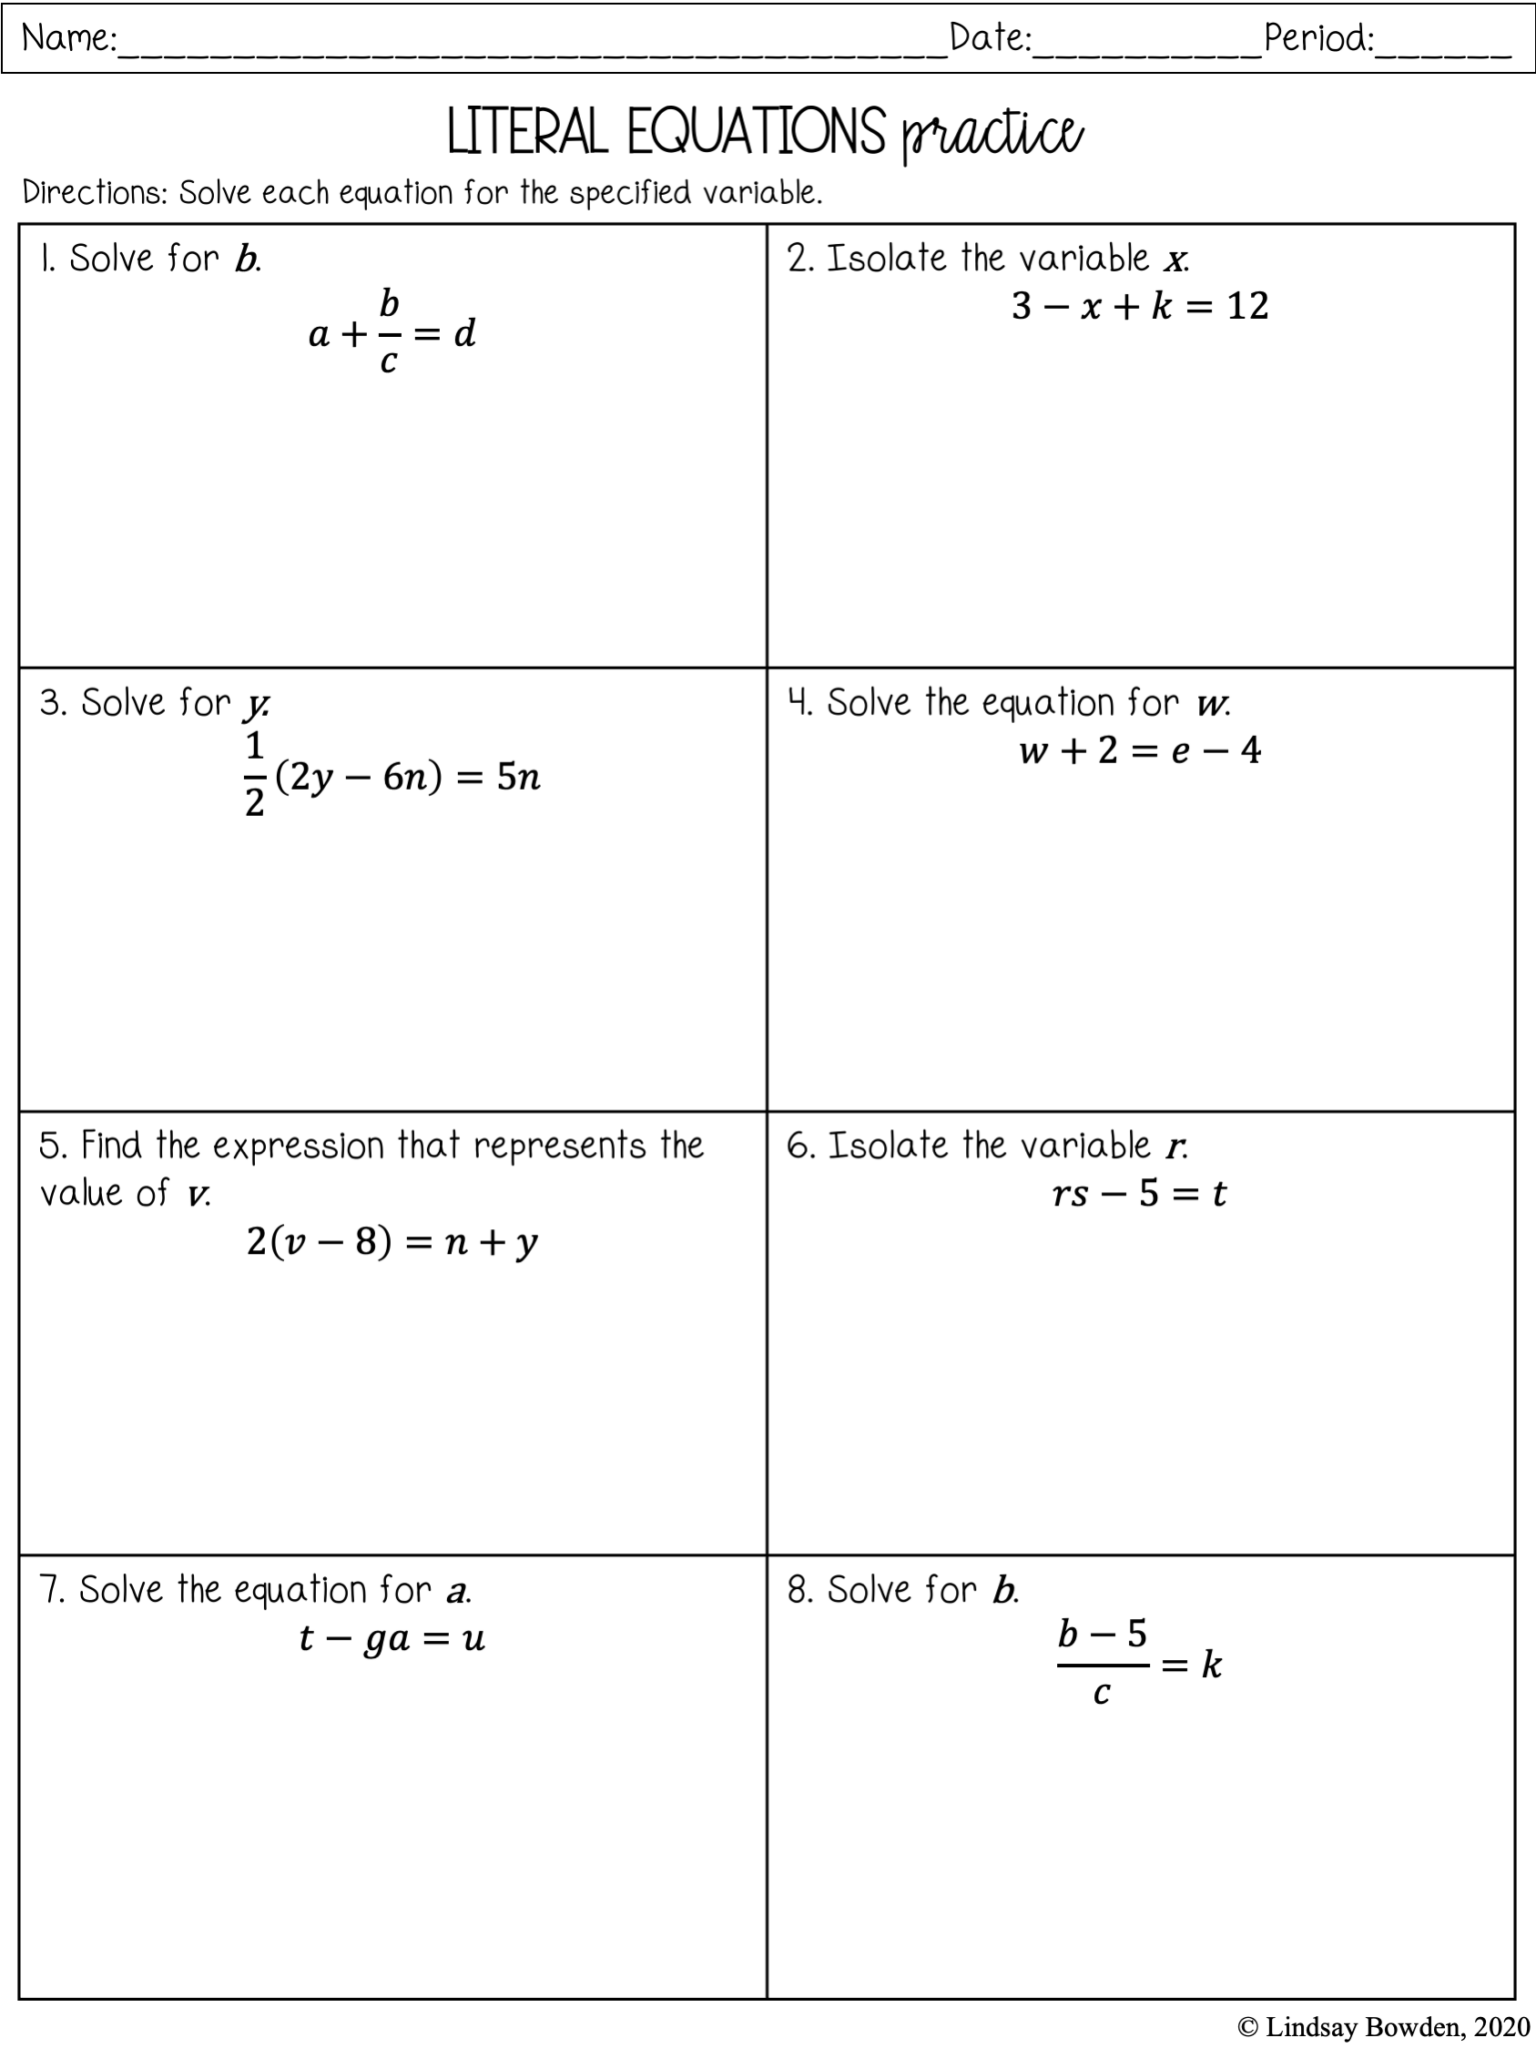 Literal Equations Notes And Worksheets Lindsay Bowden